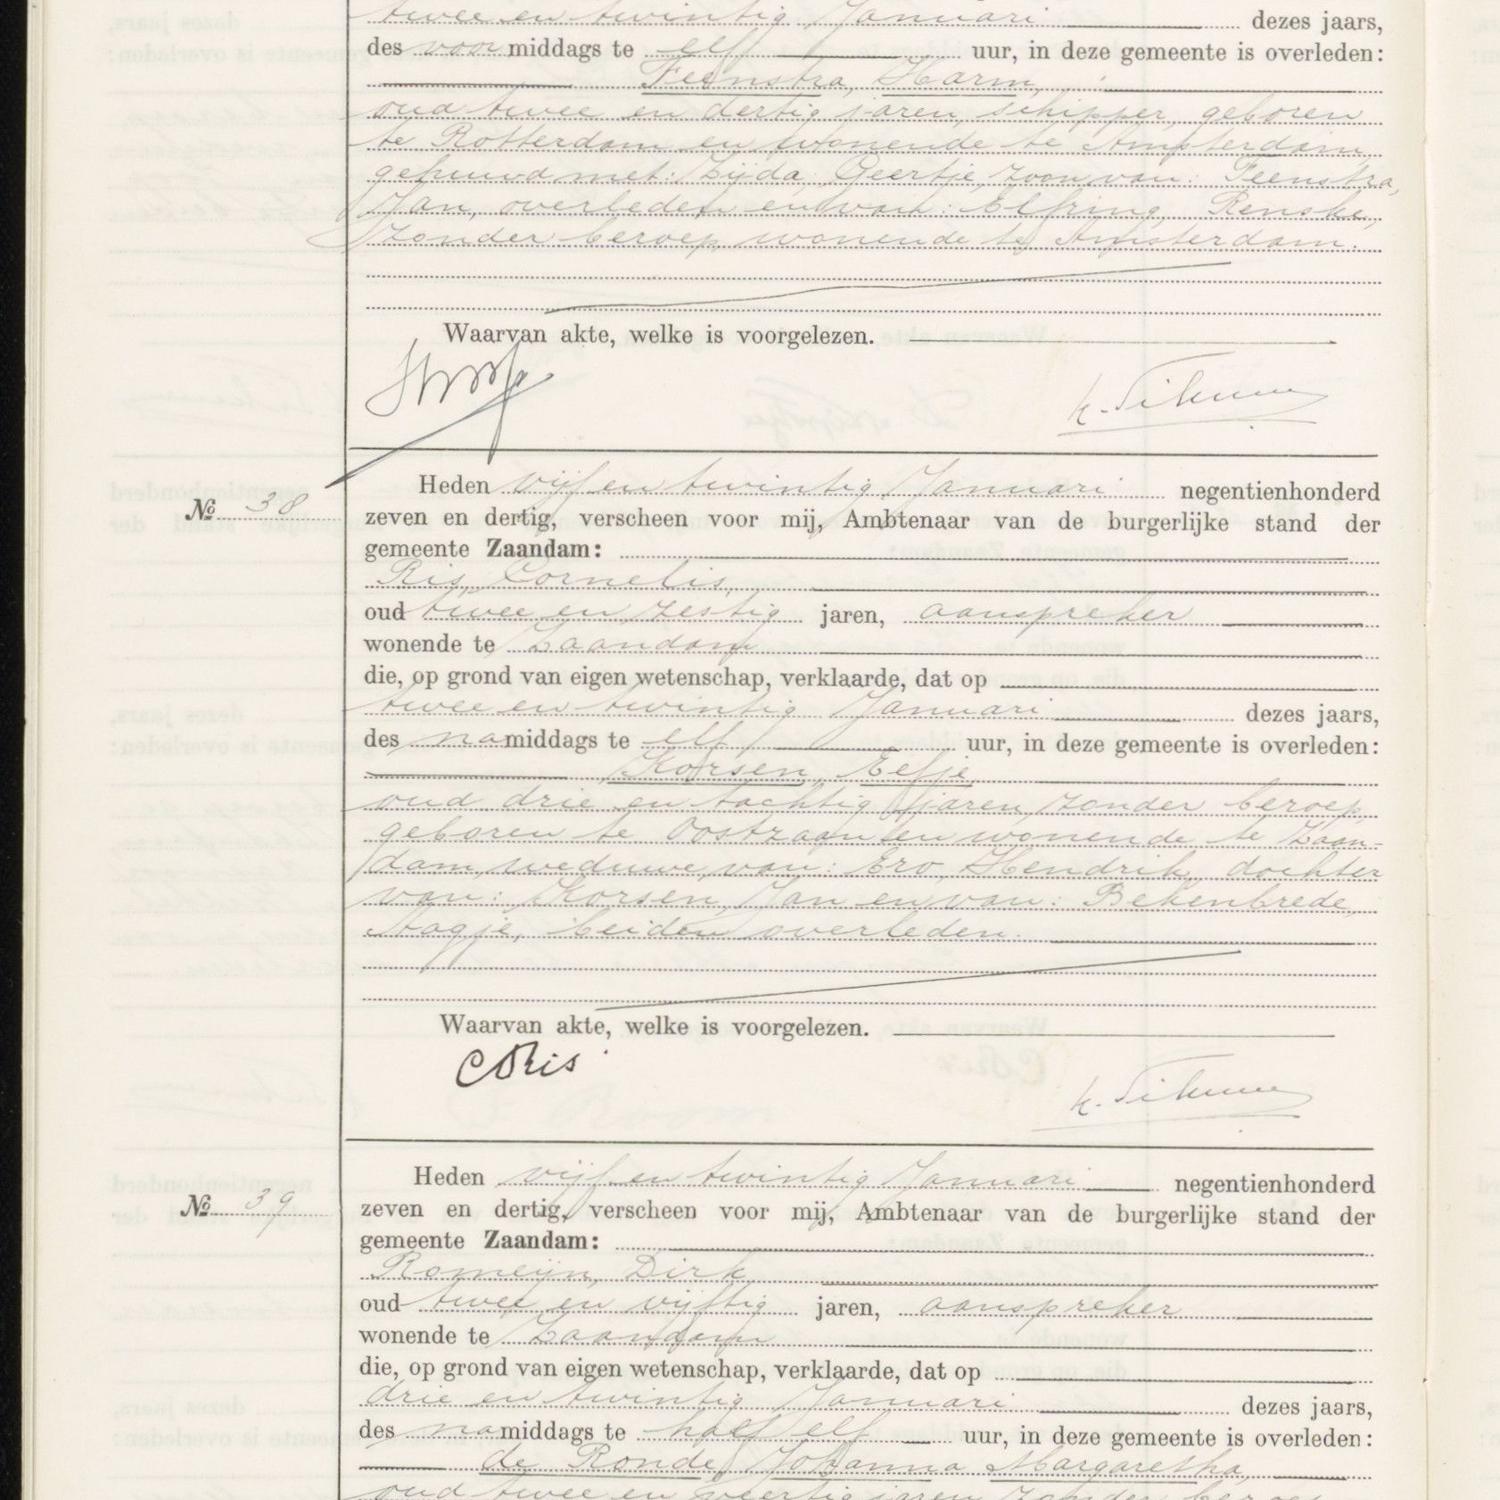 Civil registry of deaths, Zaandam, 1937, records 37-39